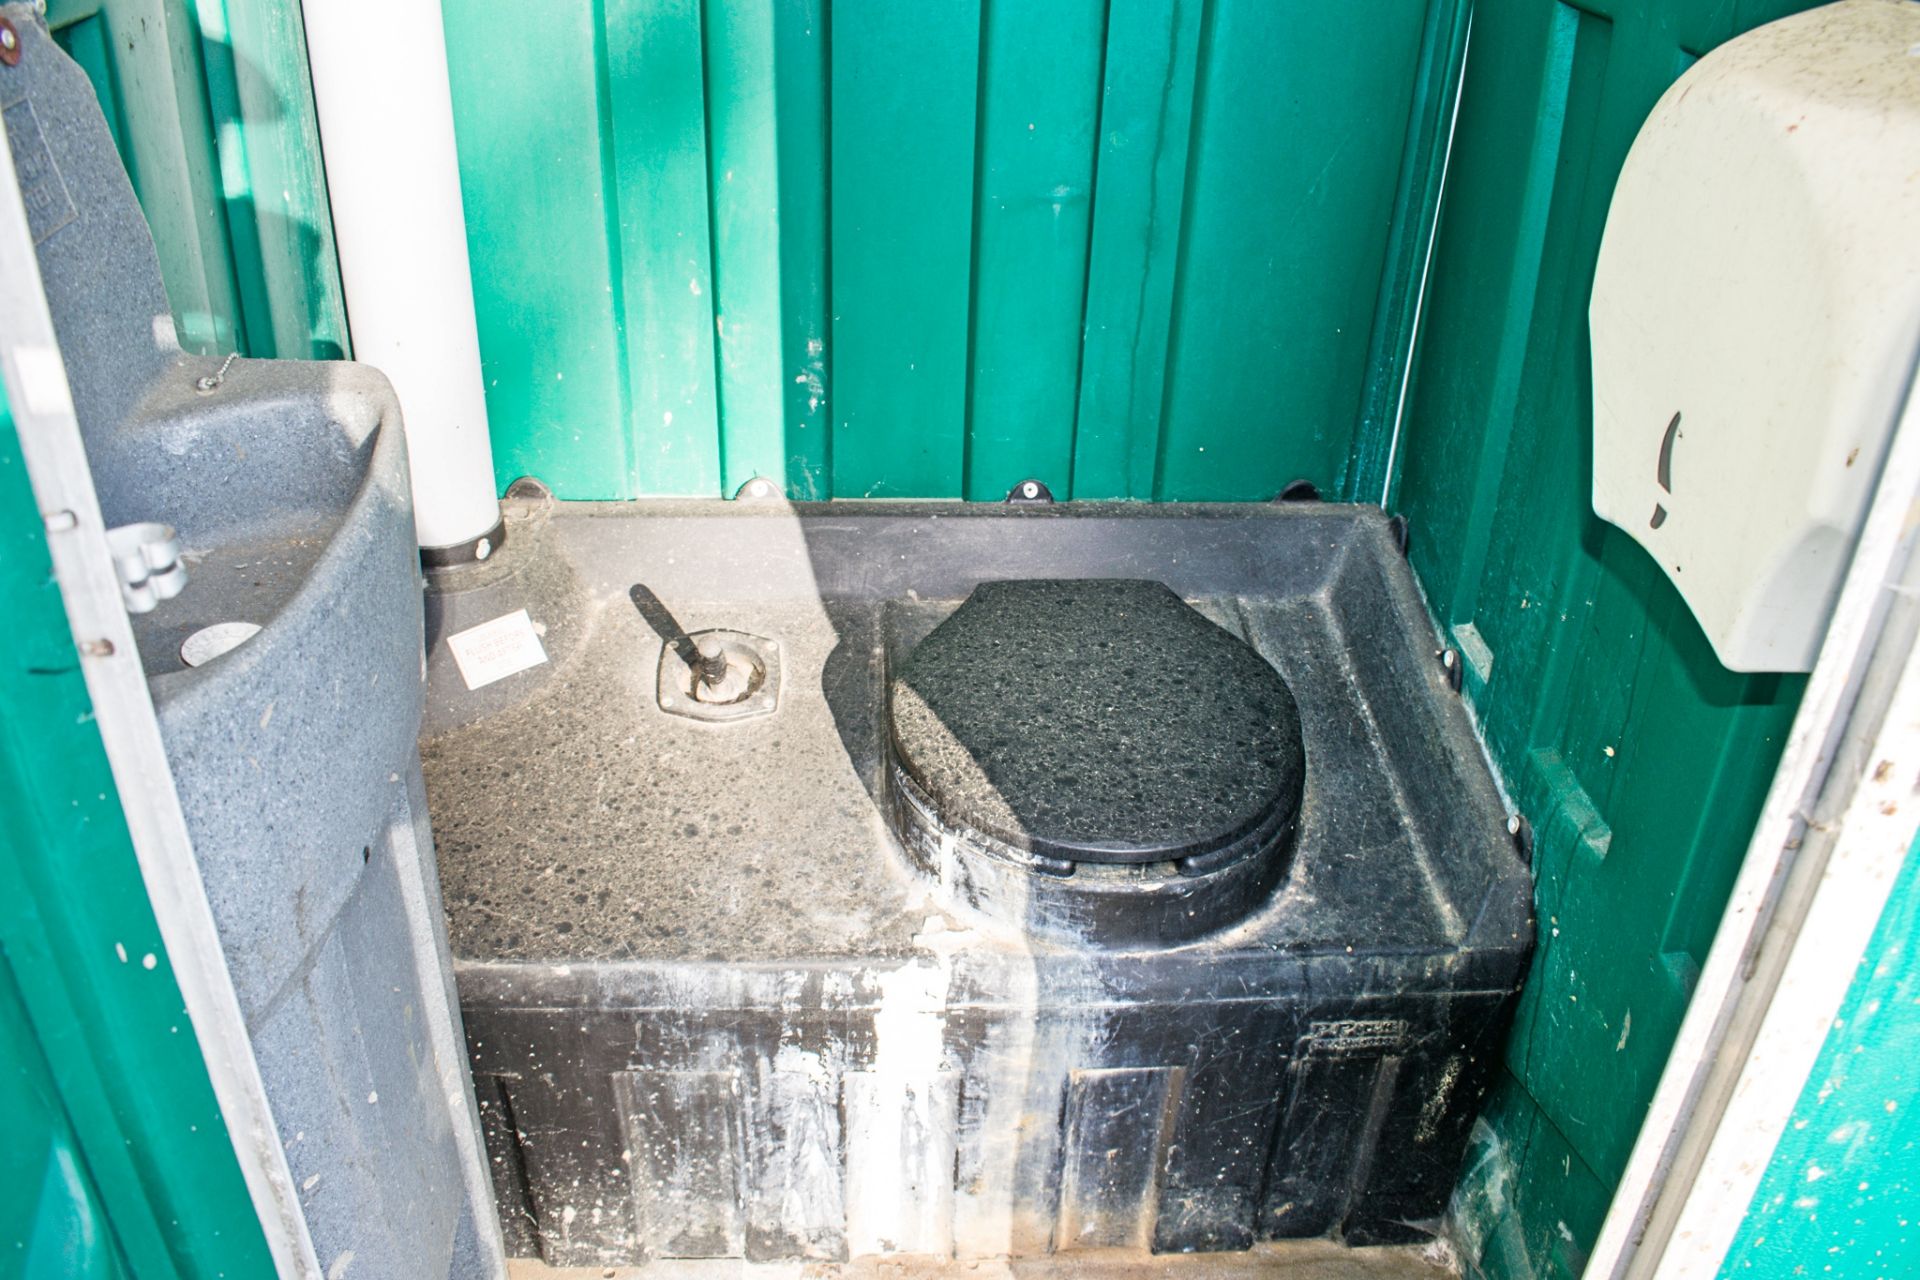 Portable plastic toilet - Image 2 of 2